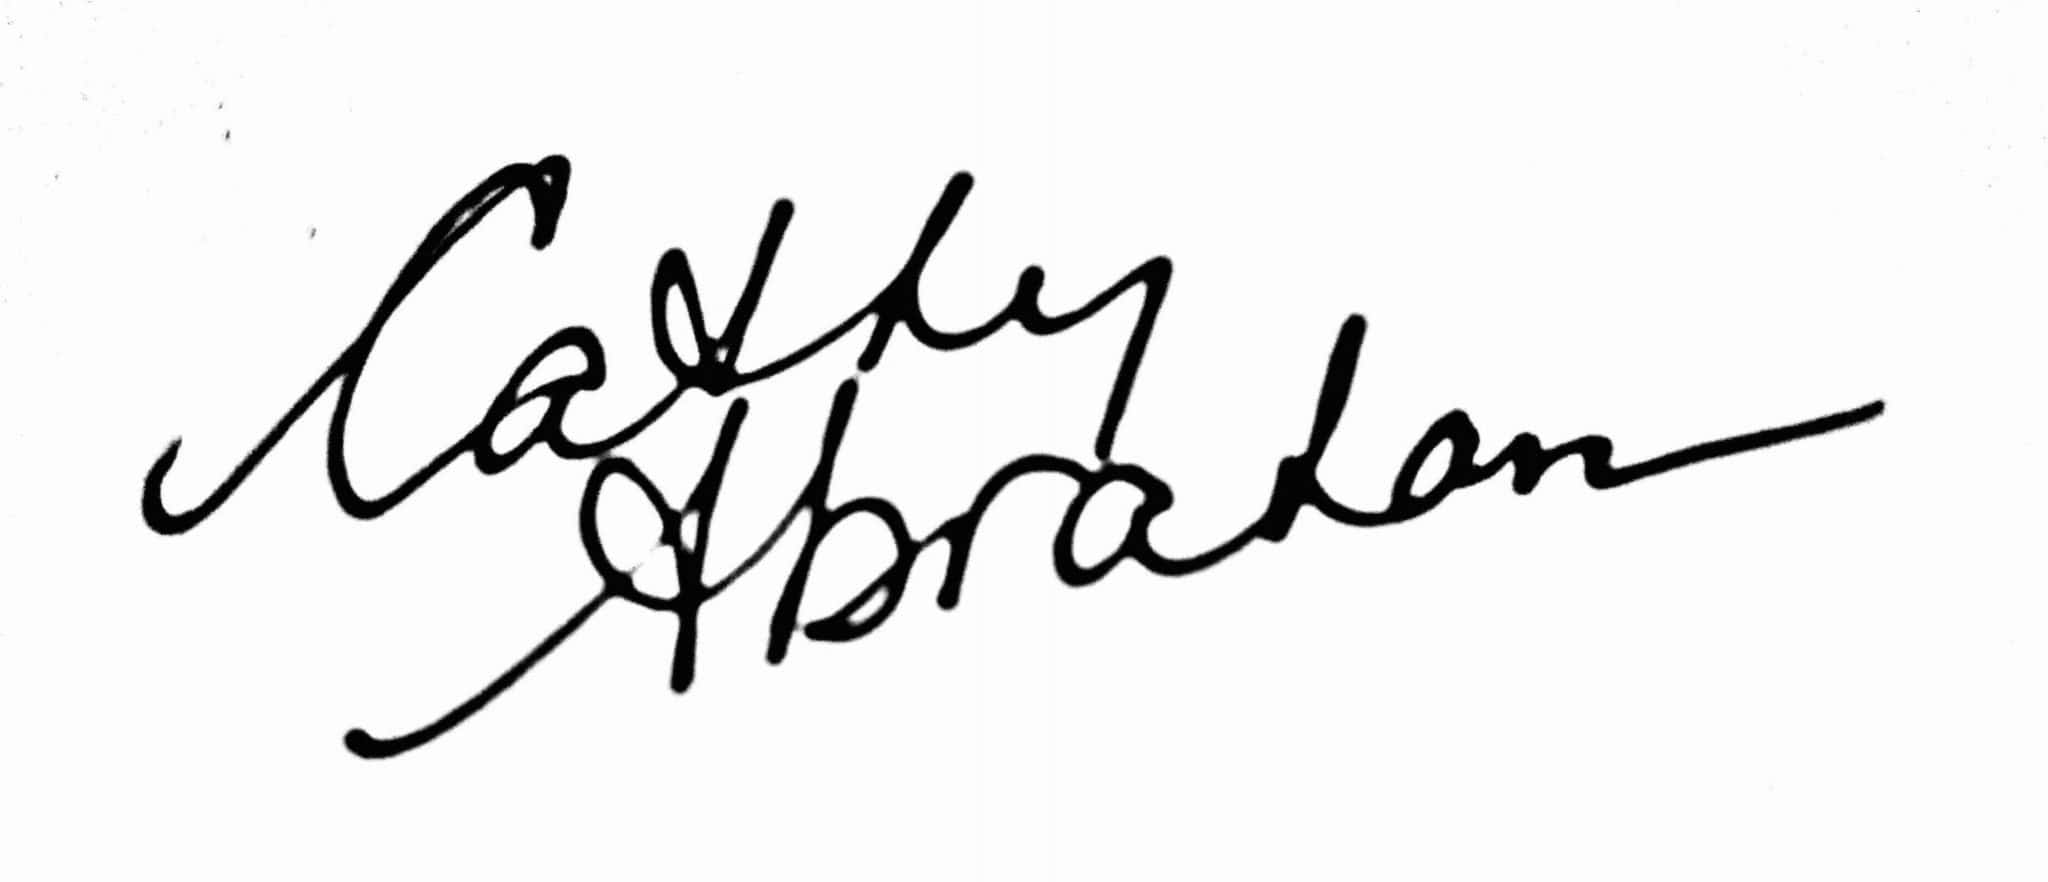 cathy abraham signature.jpg.jpg